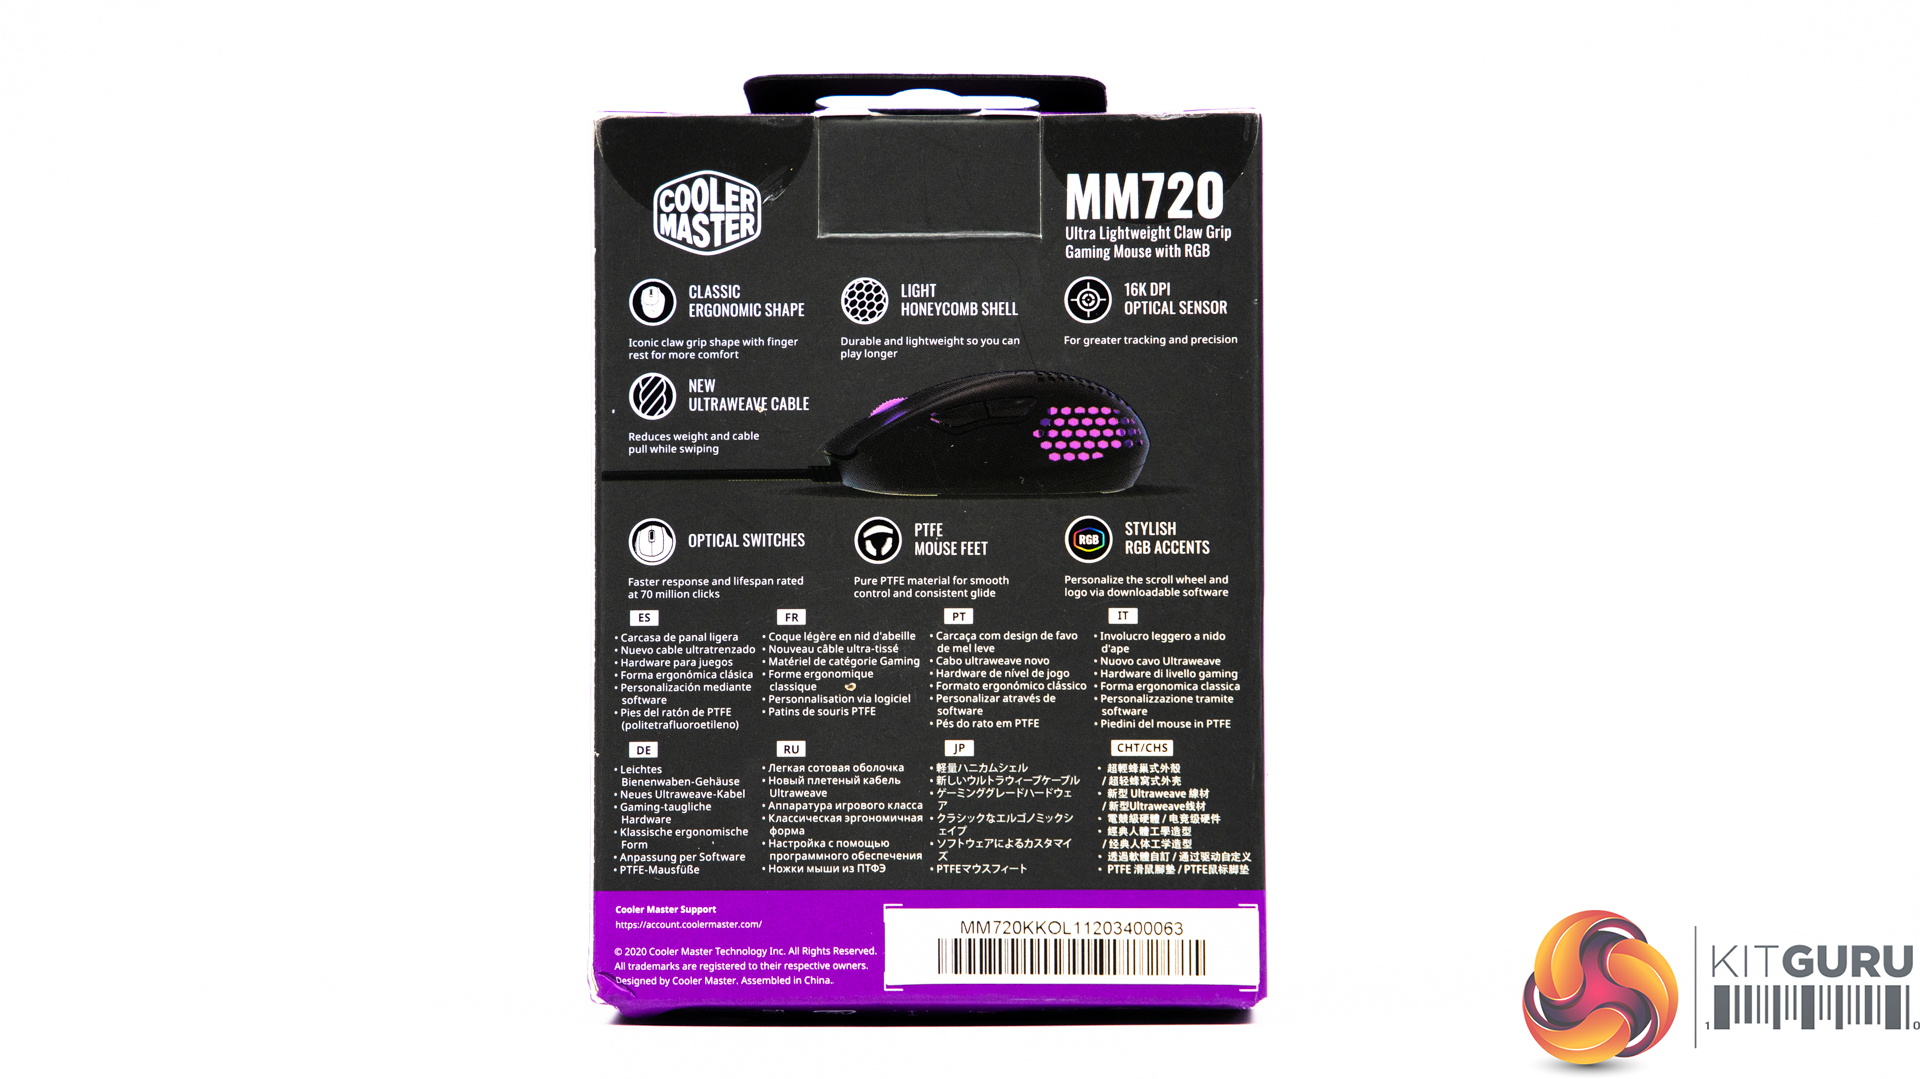 Cooler Master Mm7 Mouse Review Kitguru